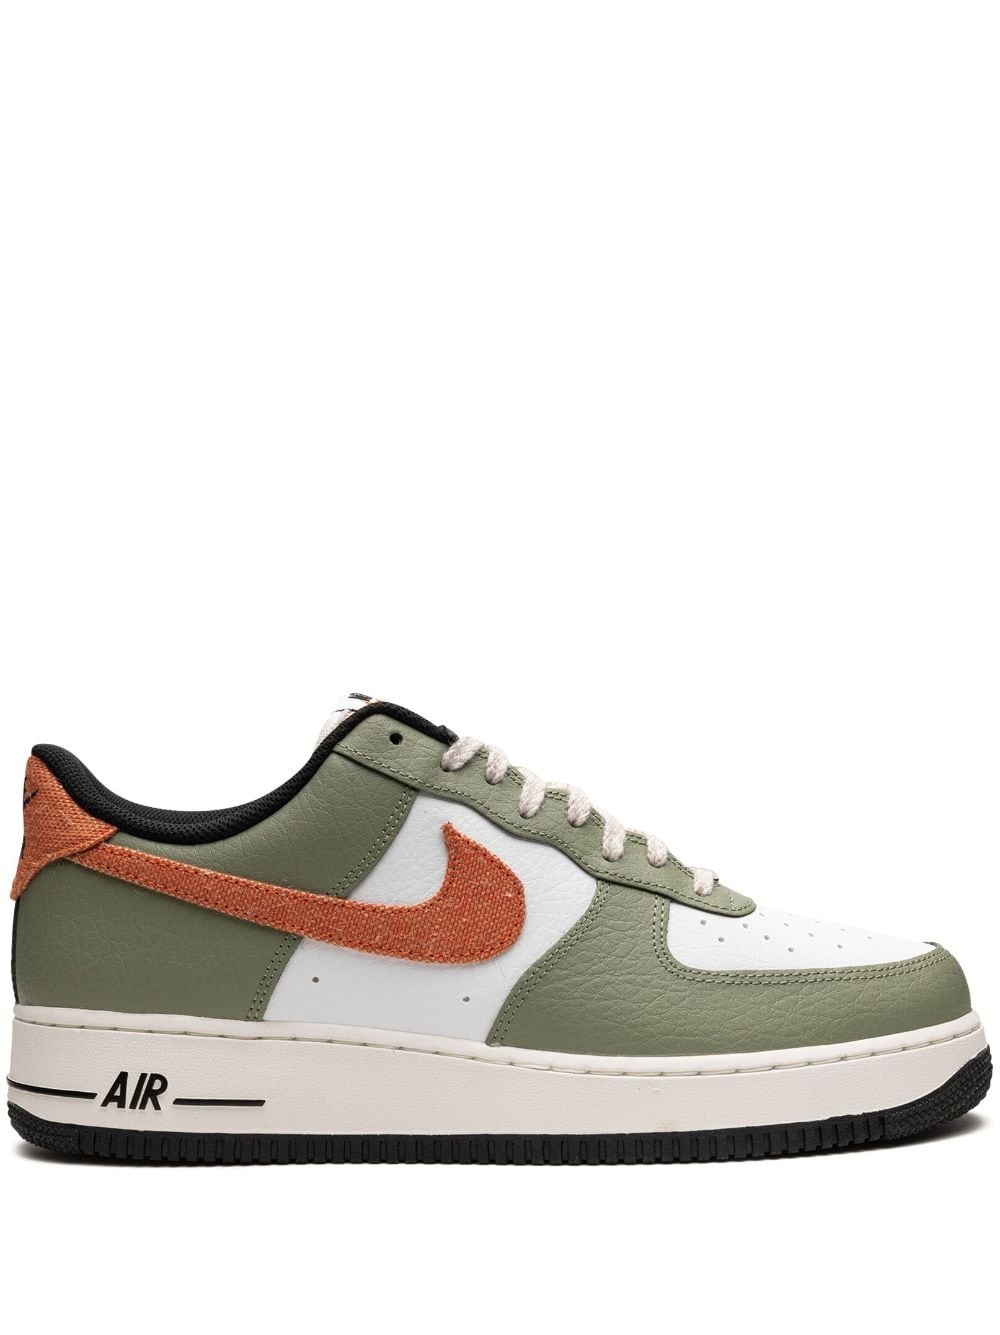 Air Force 1 Low "Oil Green" sneakers - 1